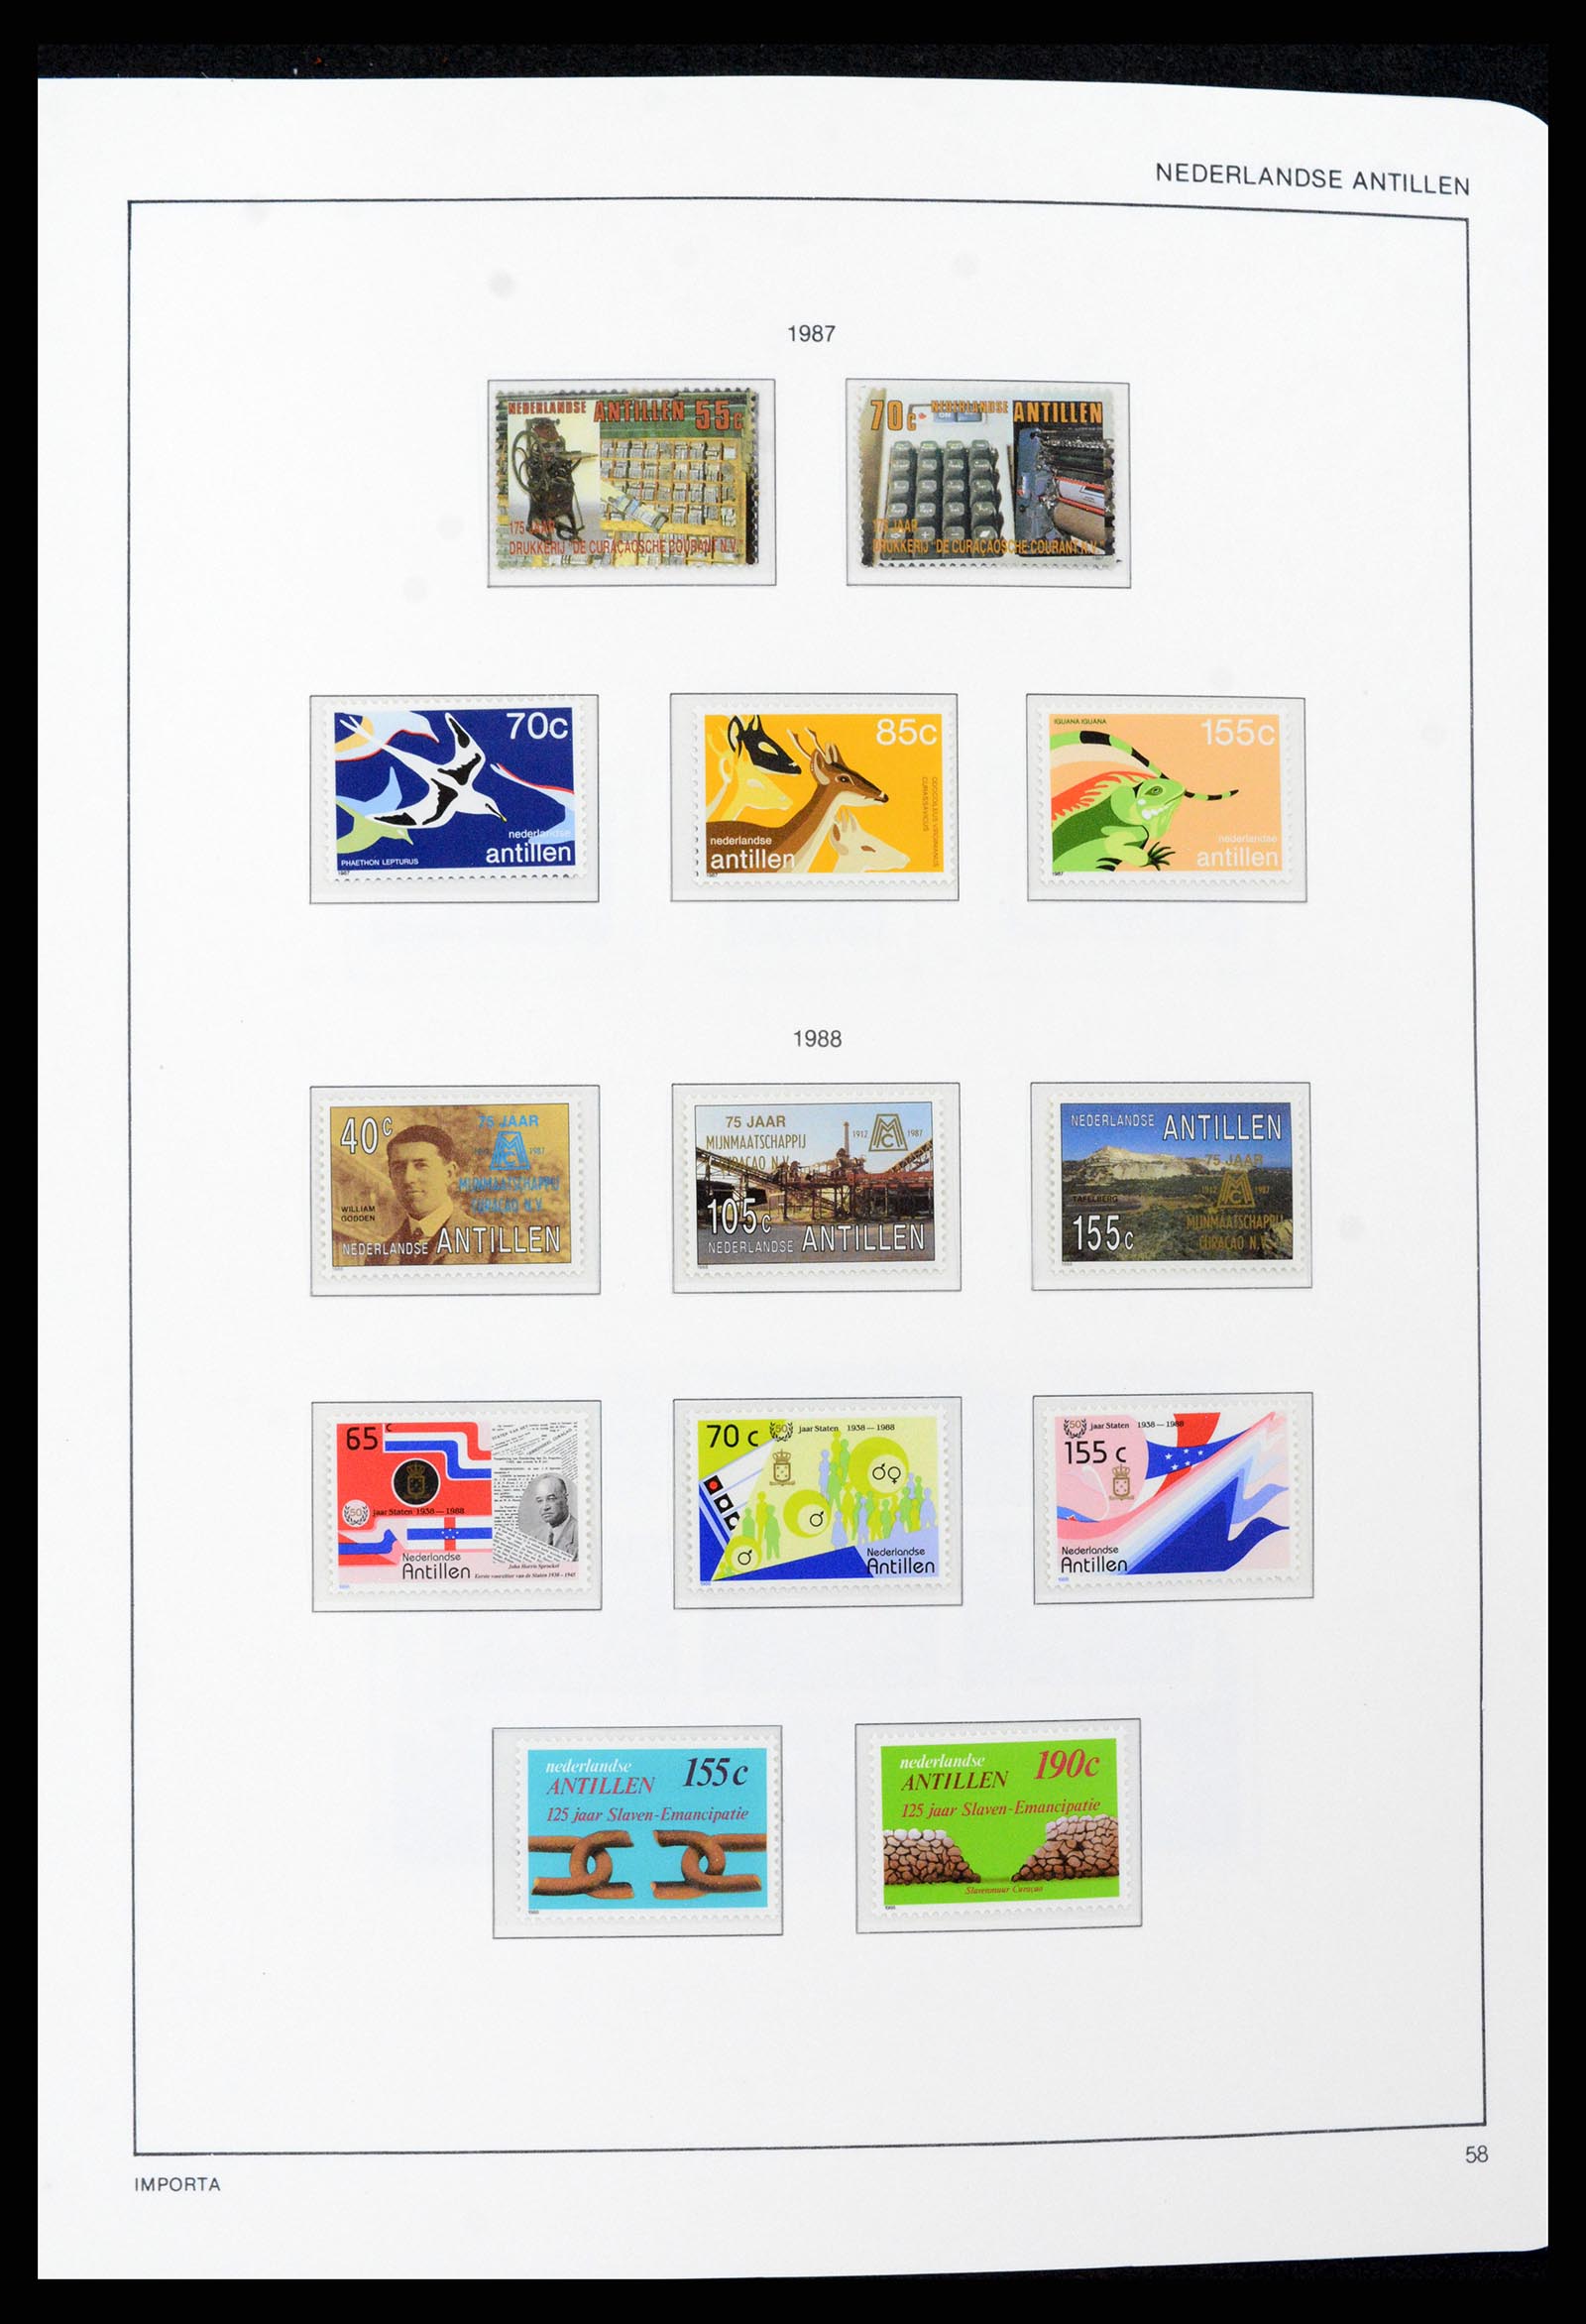 37693 058 - Stamp collection 37693 Netherlands Antilles 1949-2001.